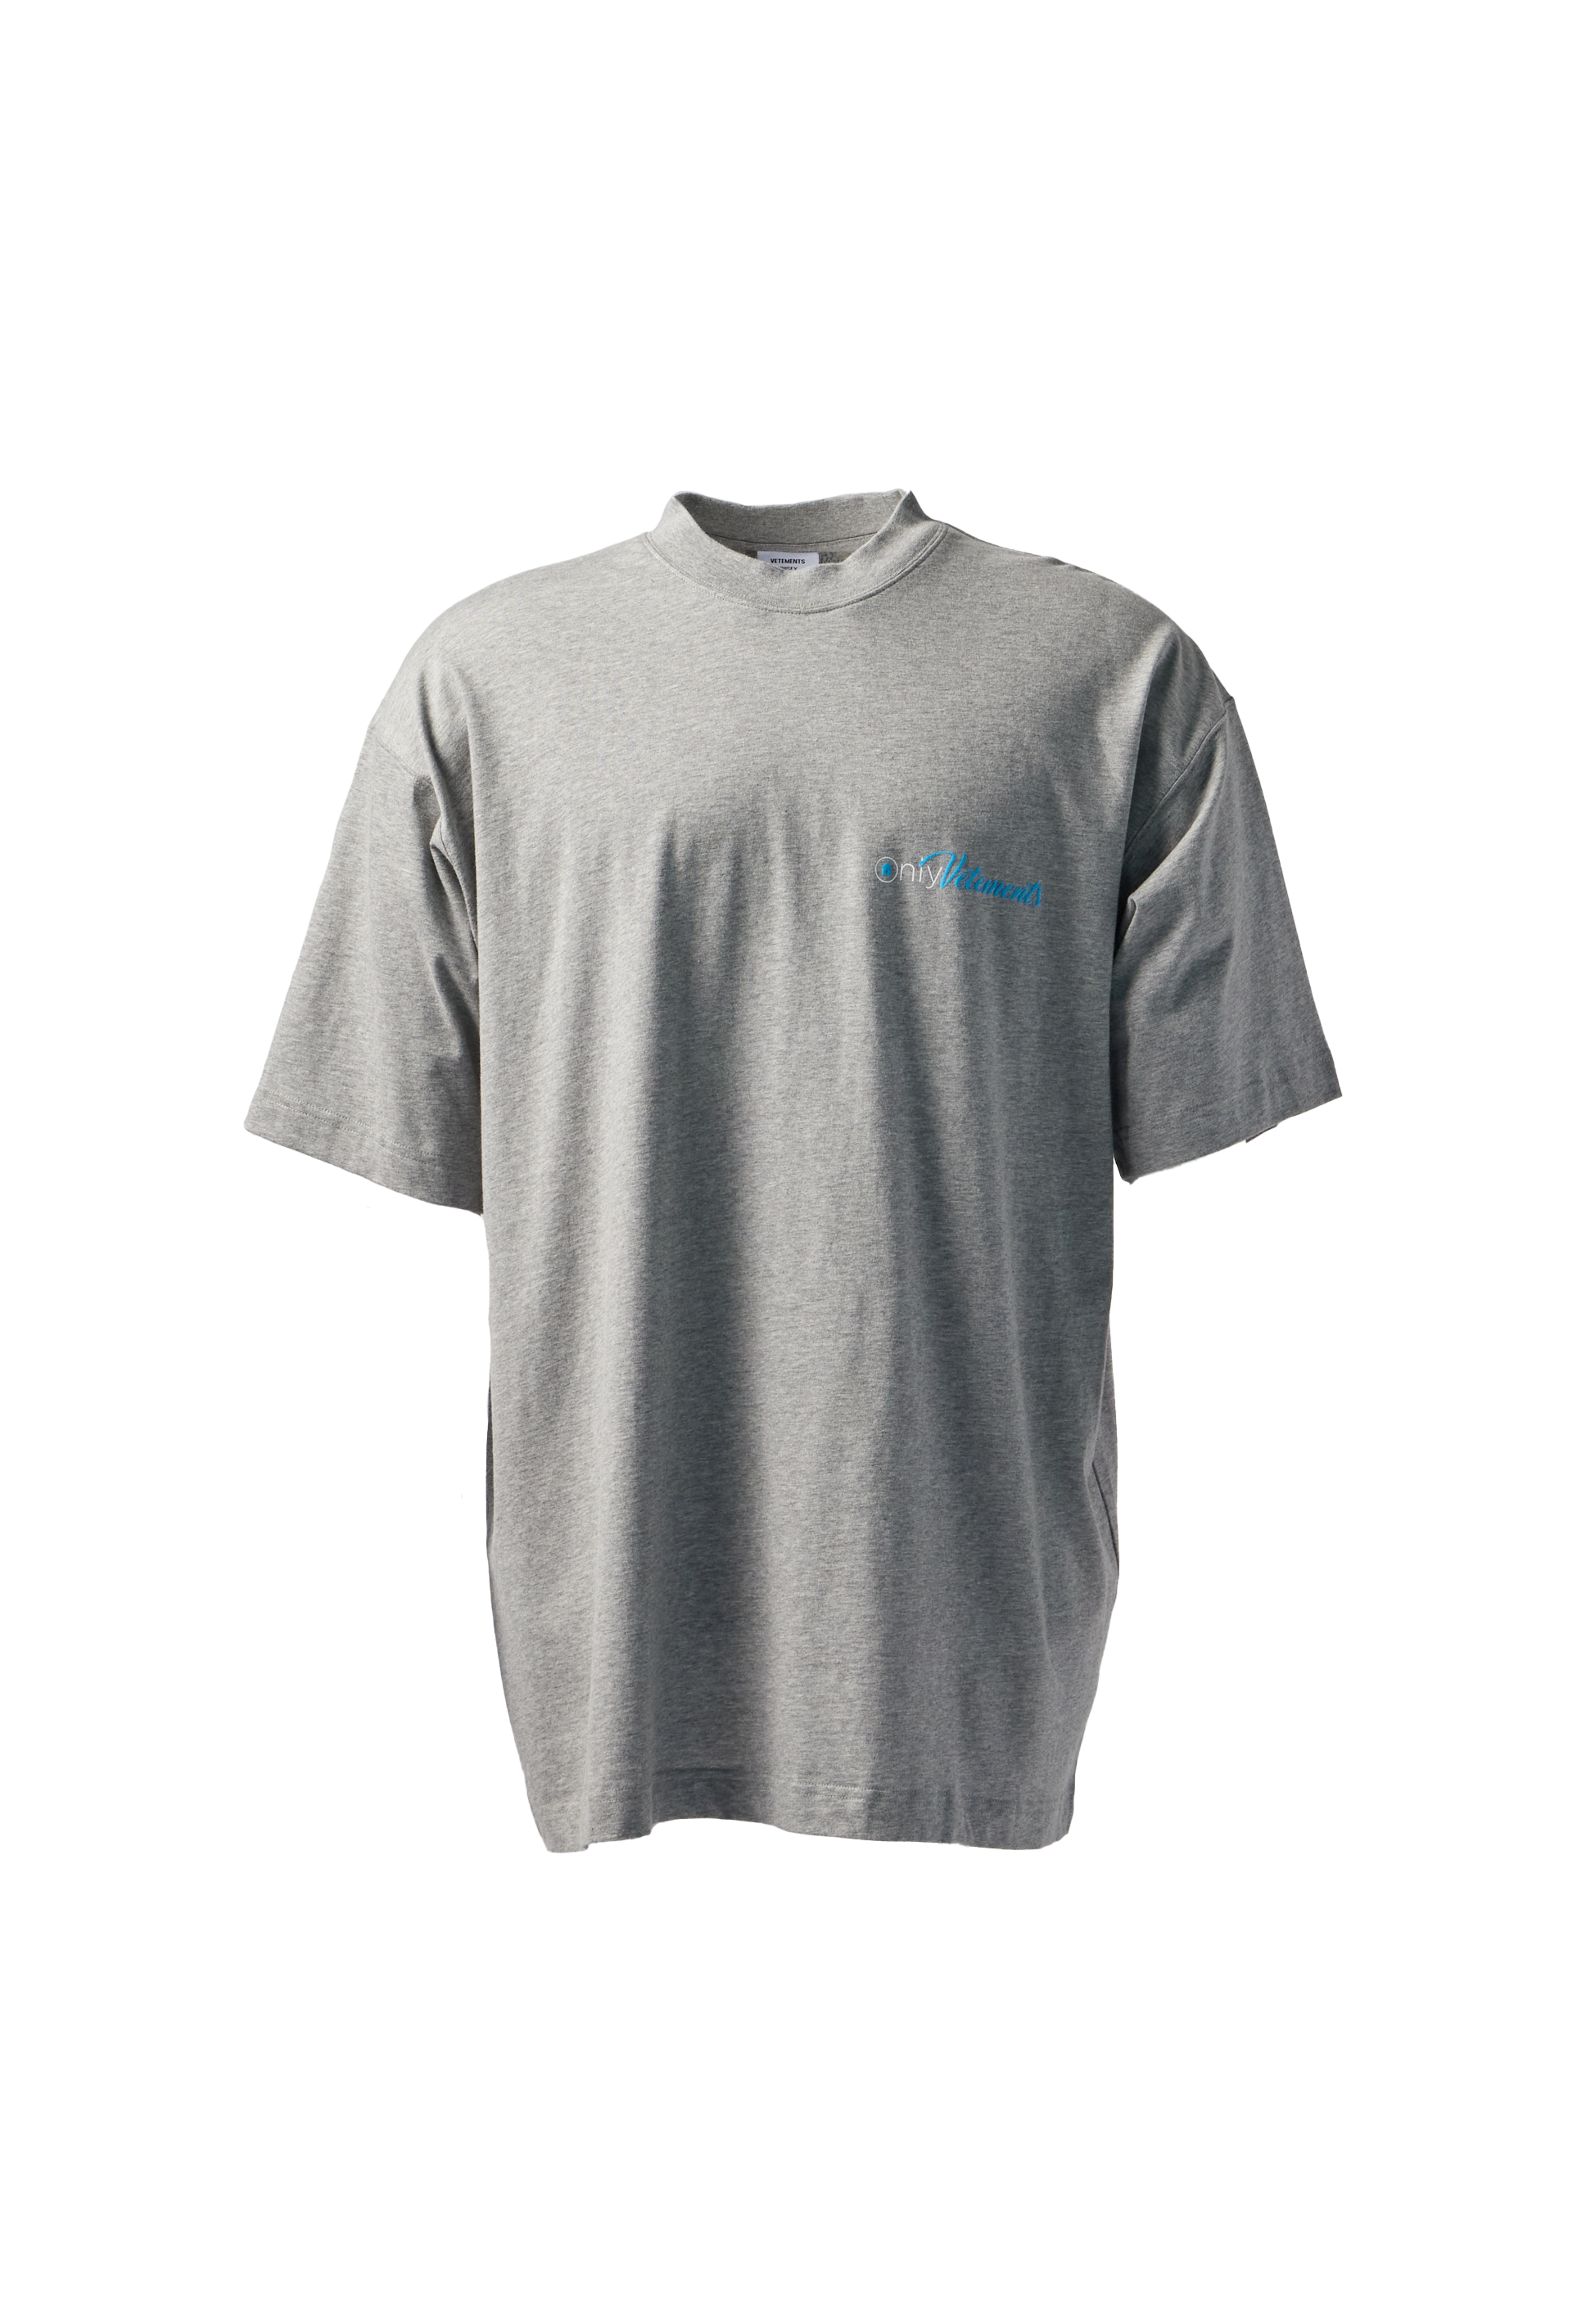 VETEMENTS - Only Vetements T-Shirt product image